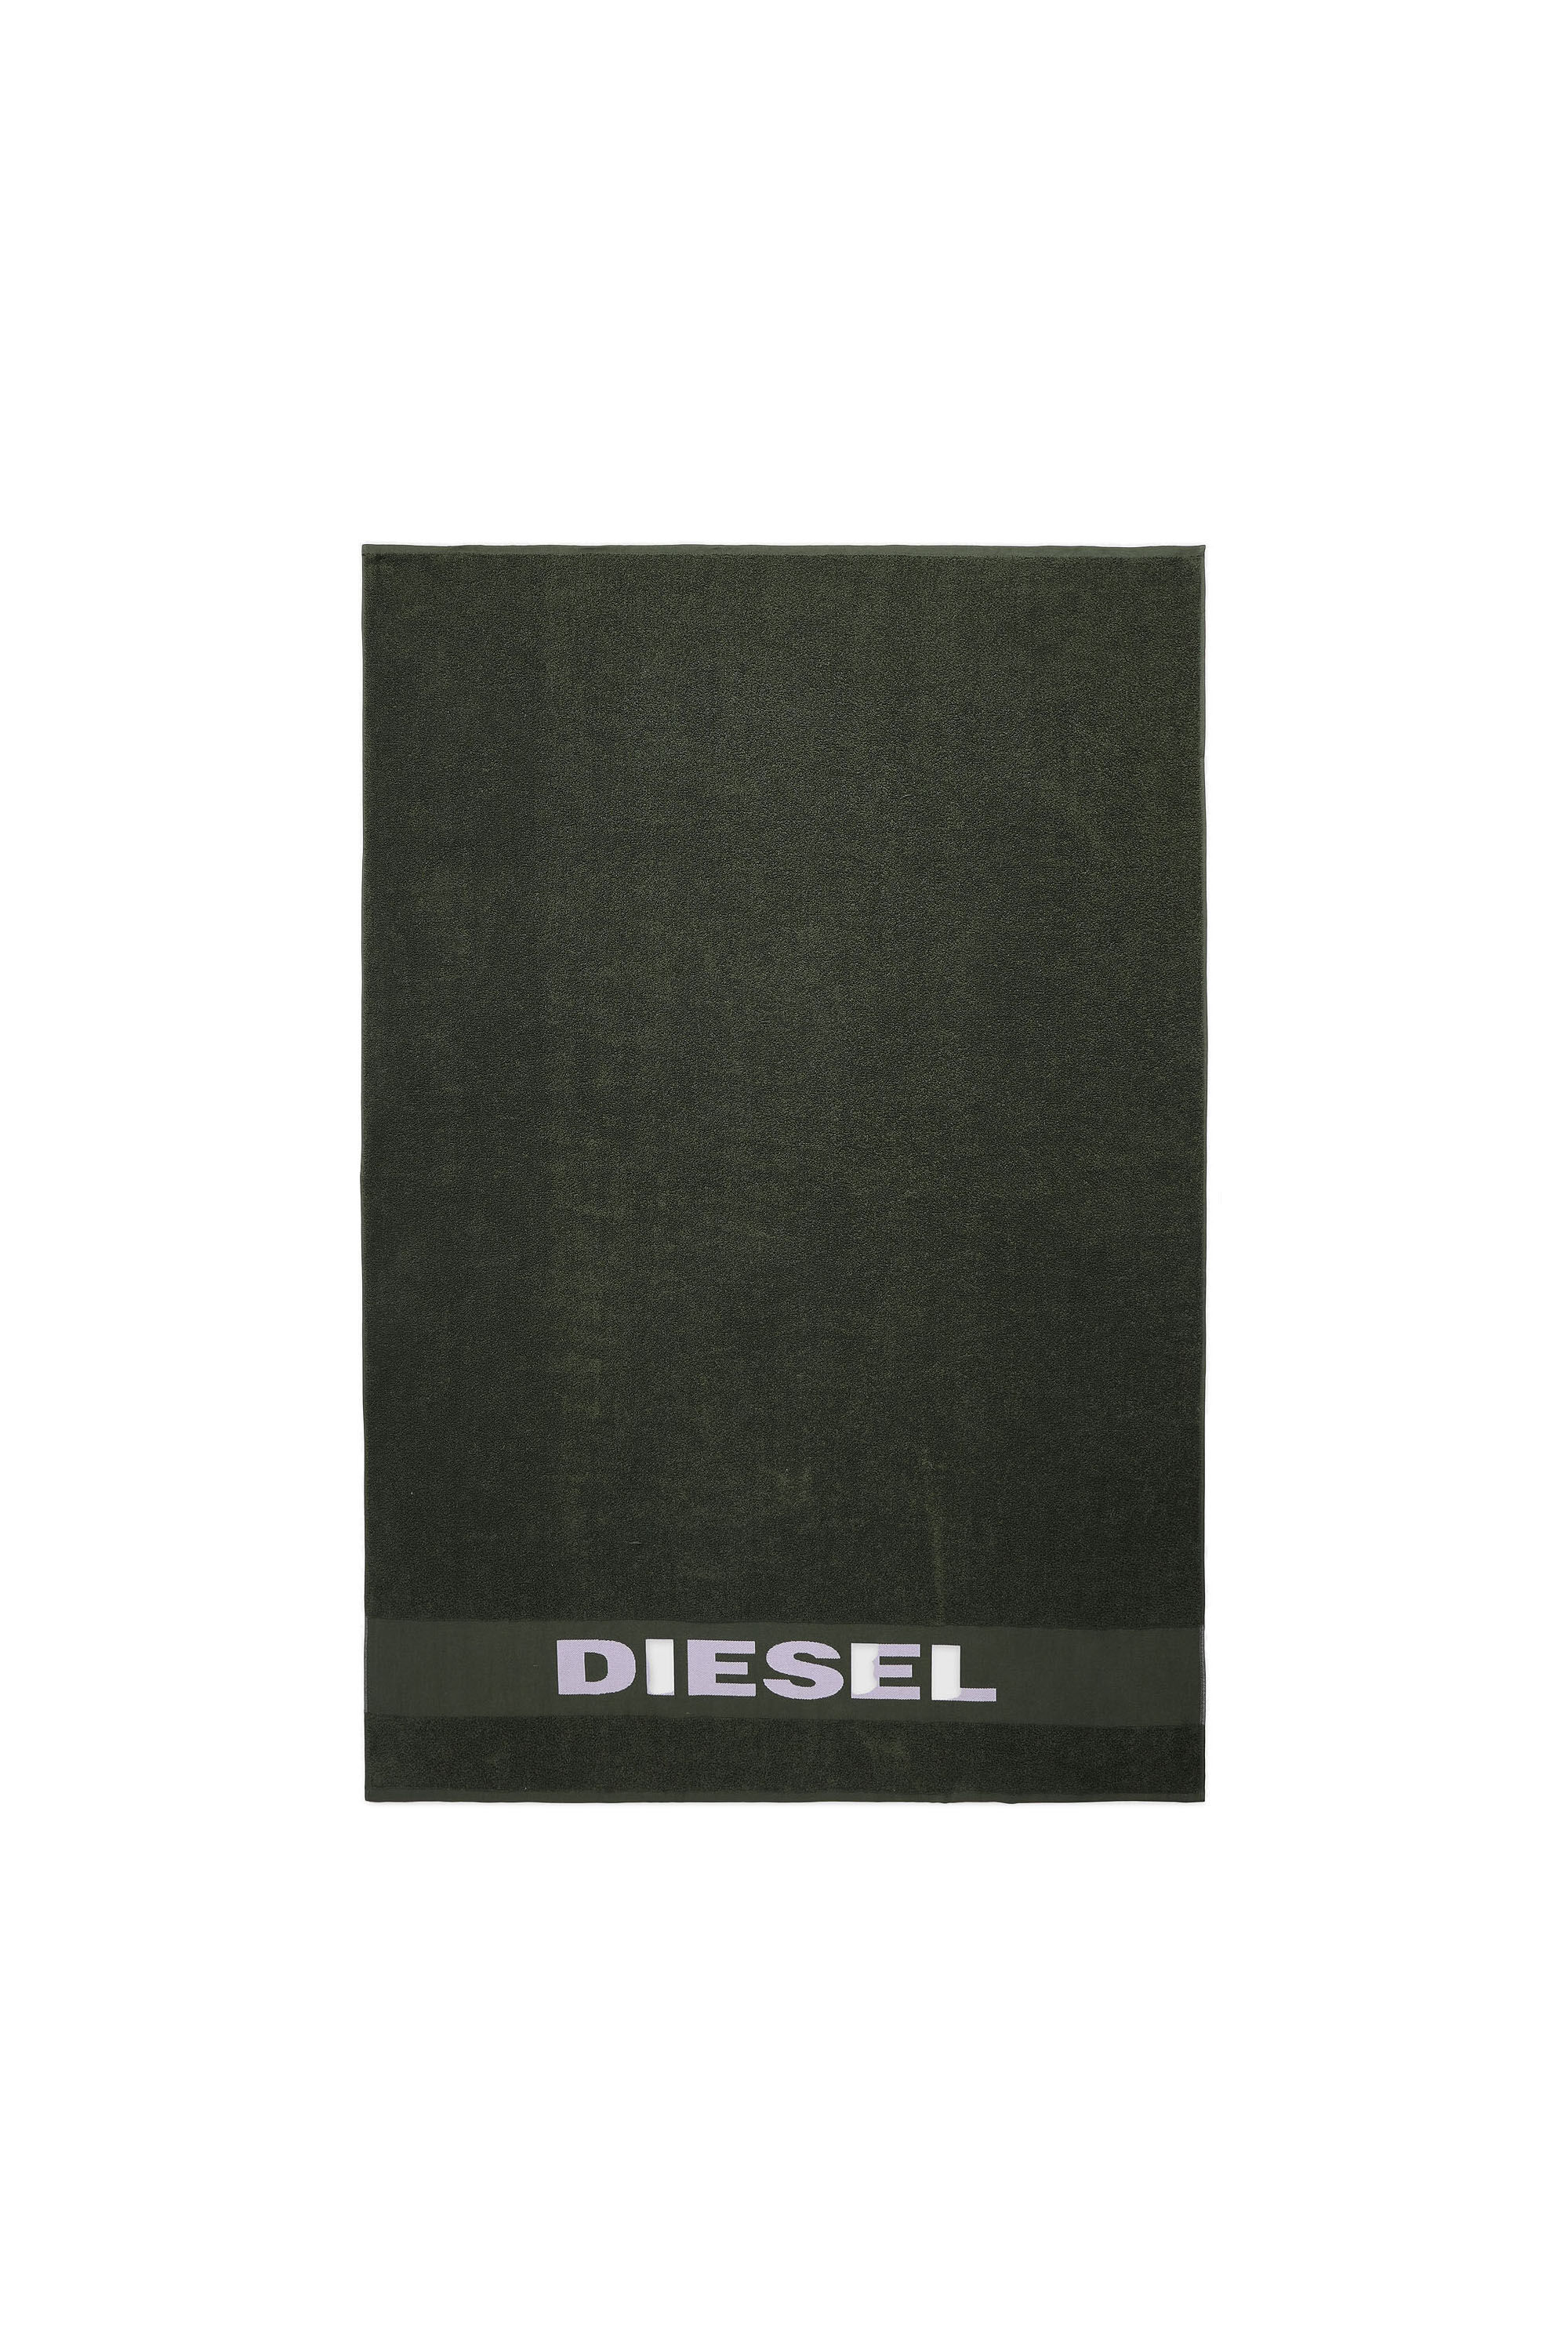 Diesel - TELO SPORT LOGO   100X150, Green - Image 2